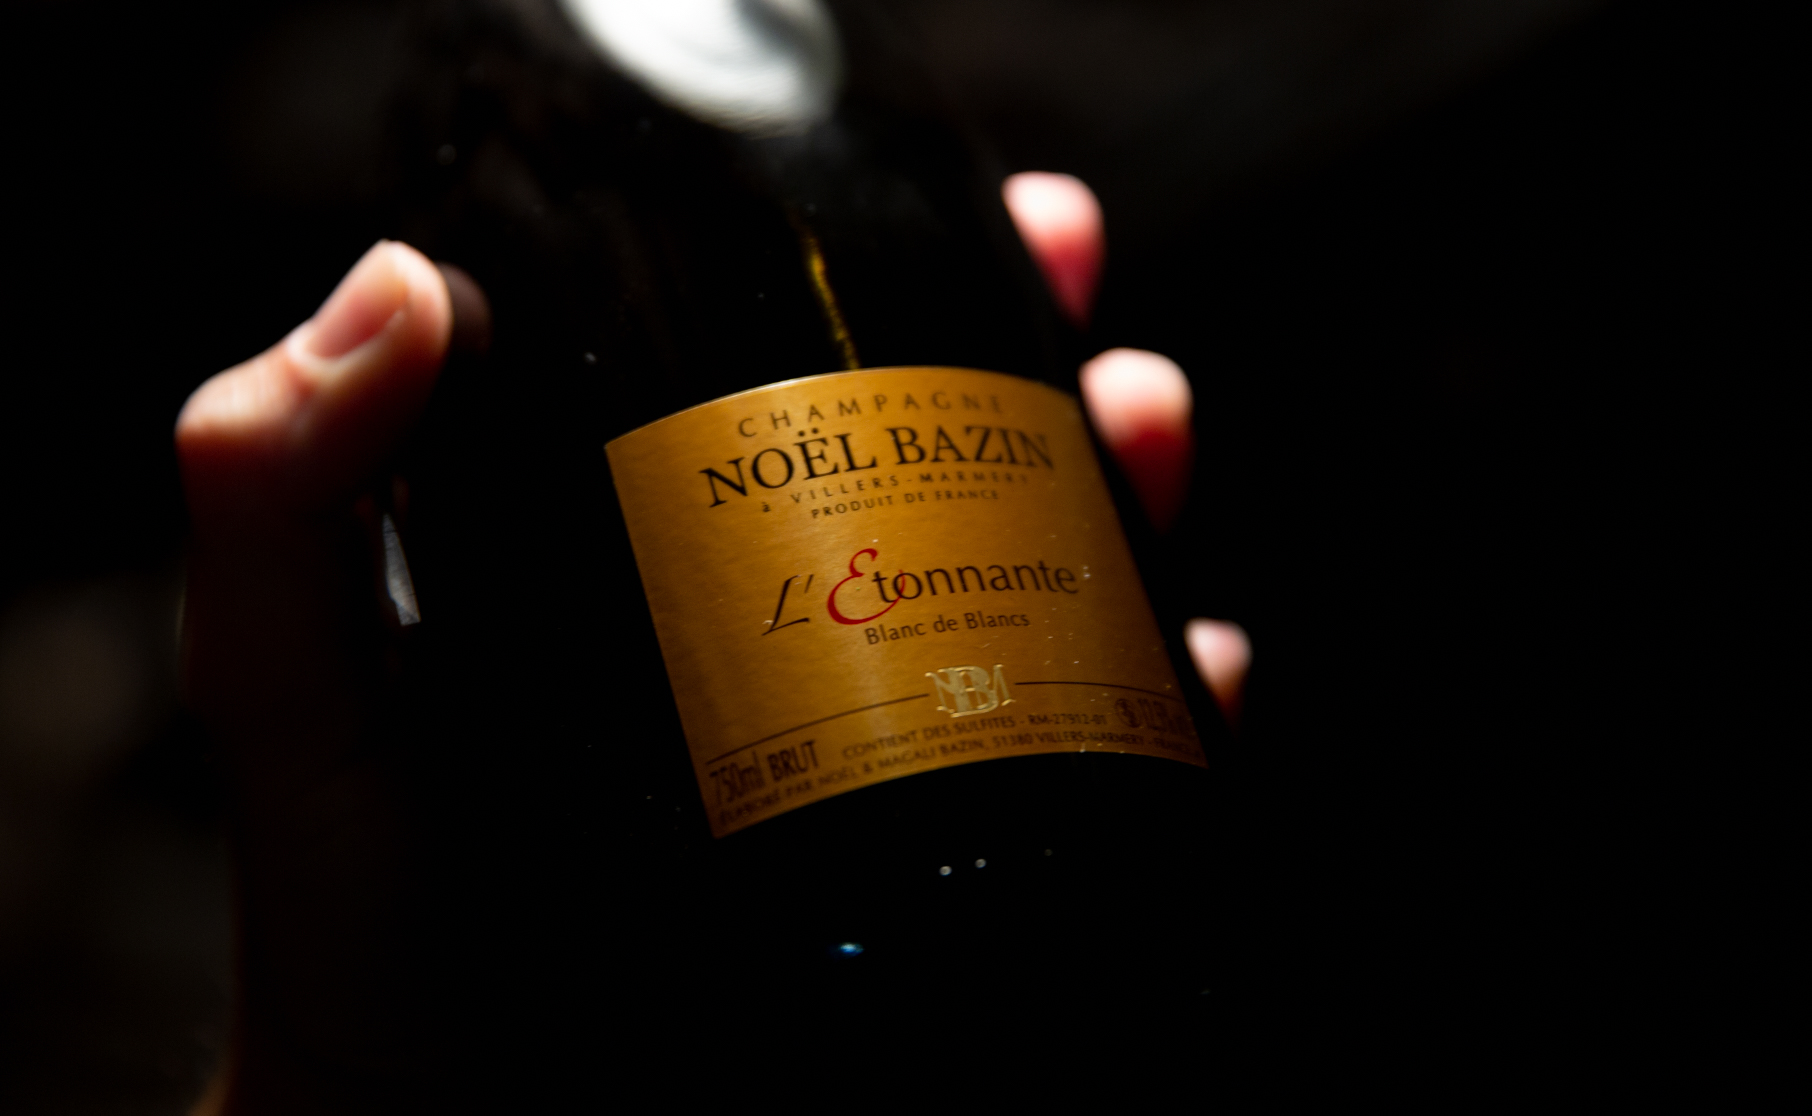 Capsule de champagne Noel Bazin Noir et or new